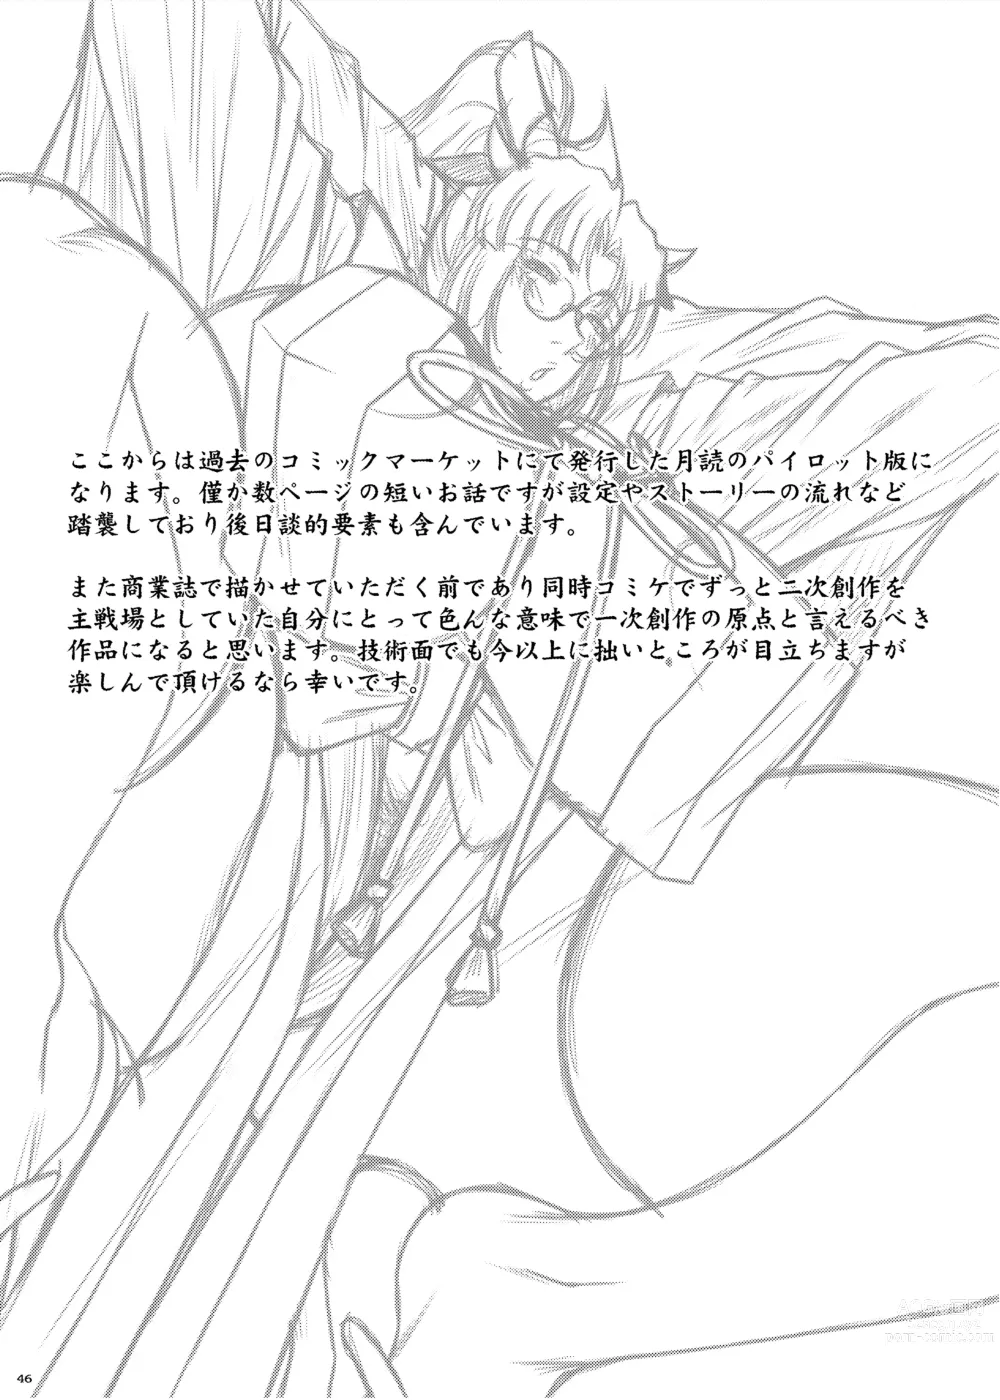 Page 48 of doujinshi Tsukuyomi